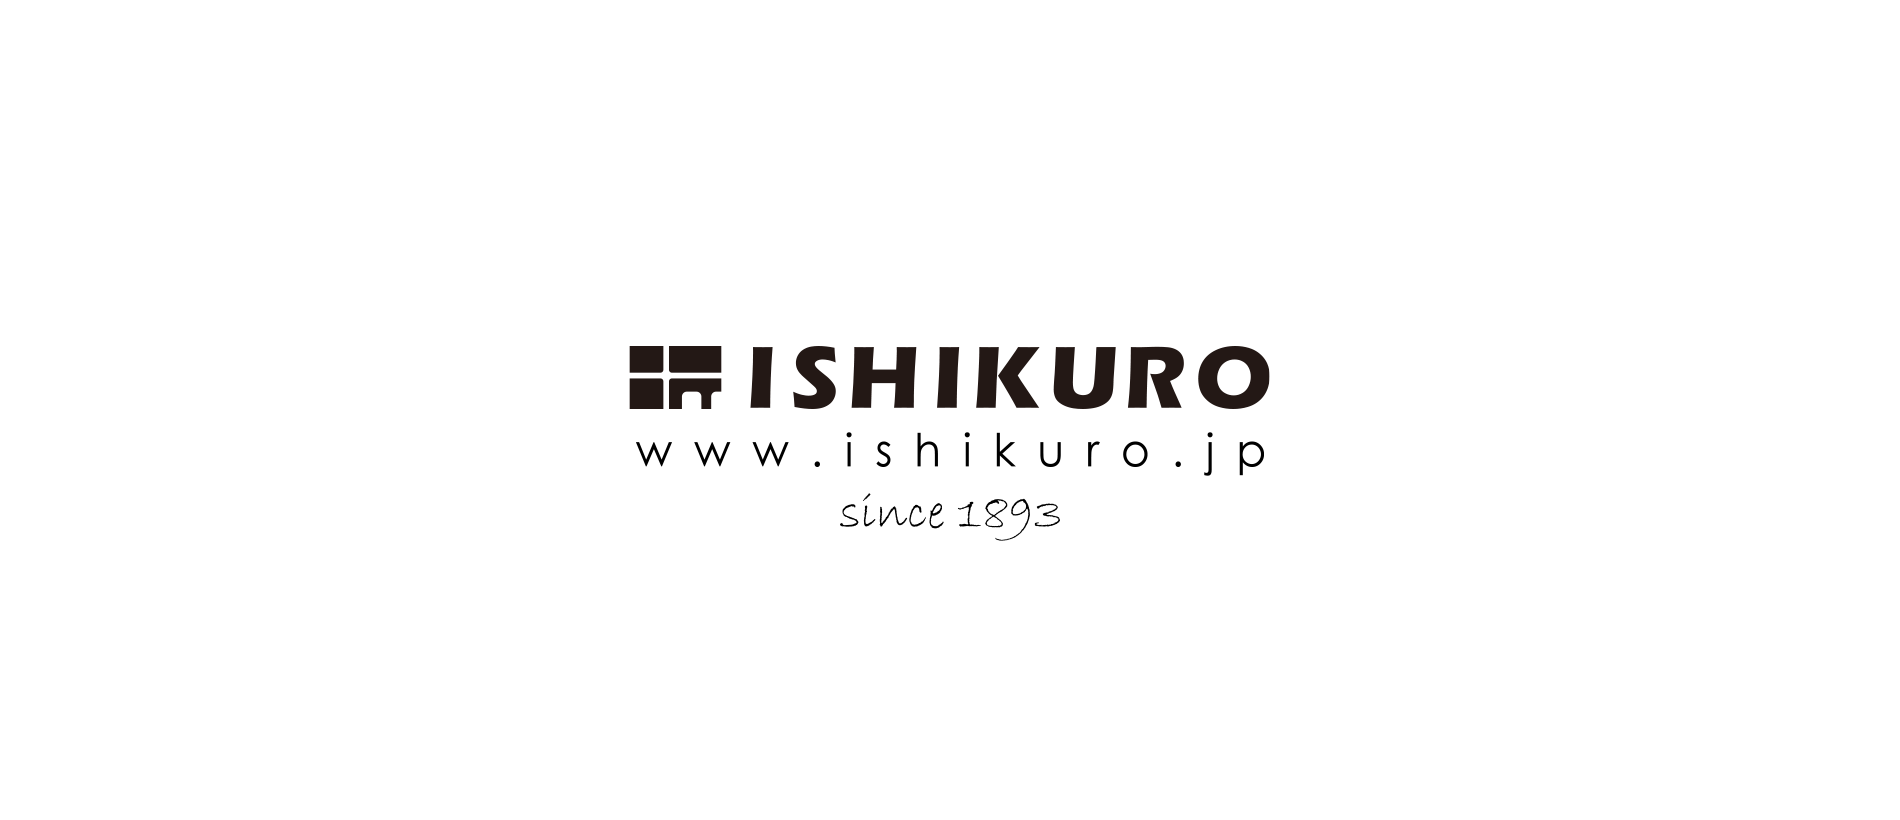 ISHIKURO since 1893